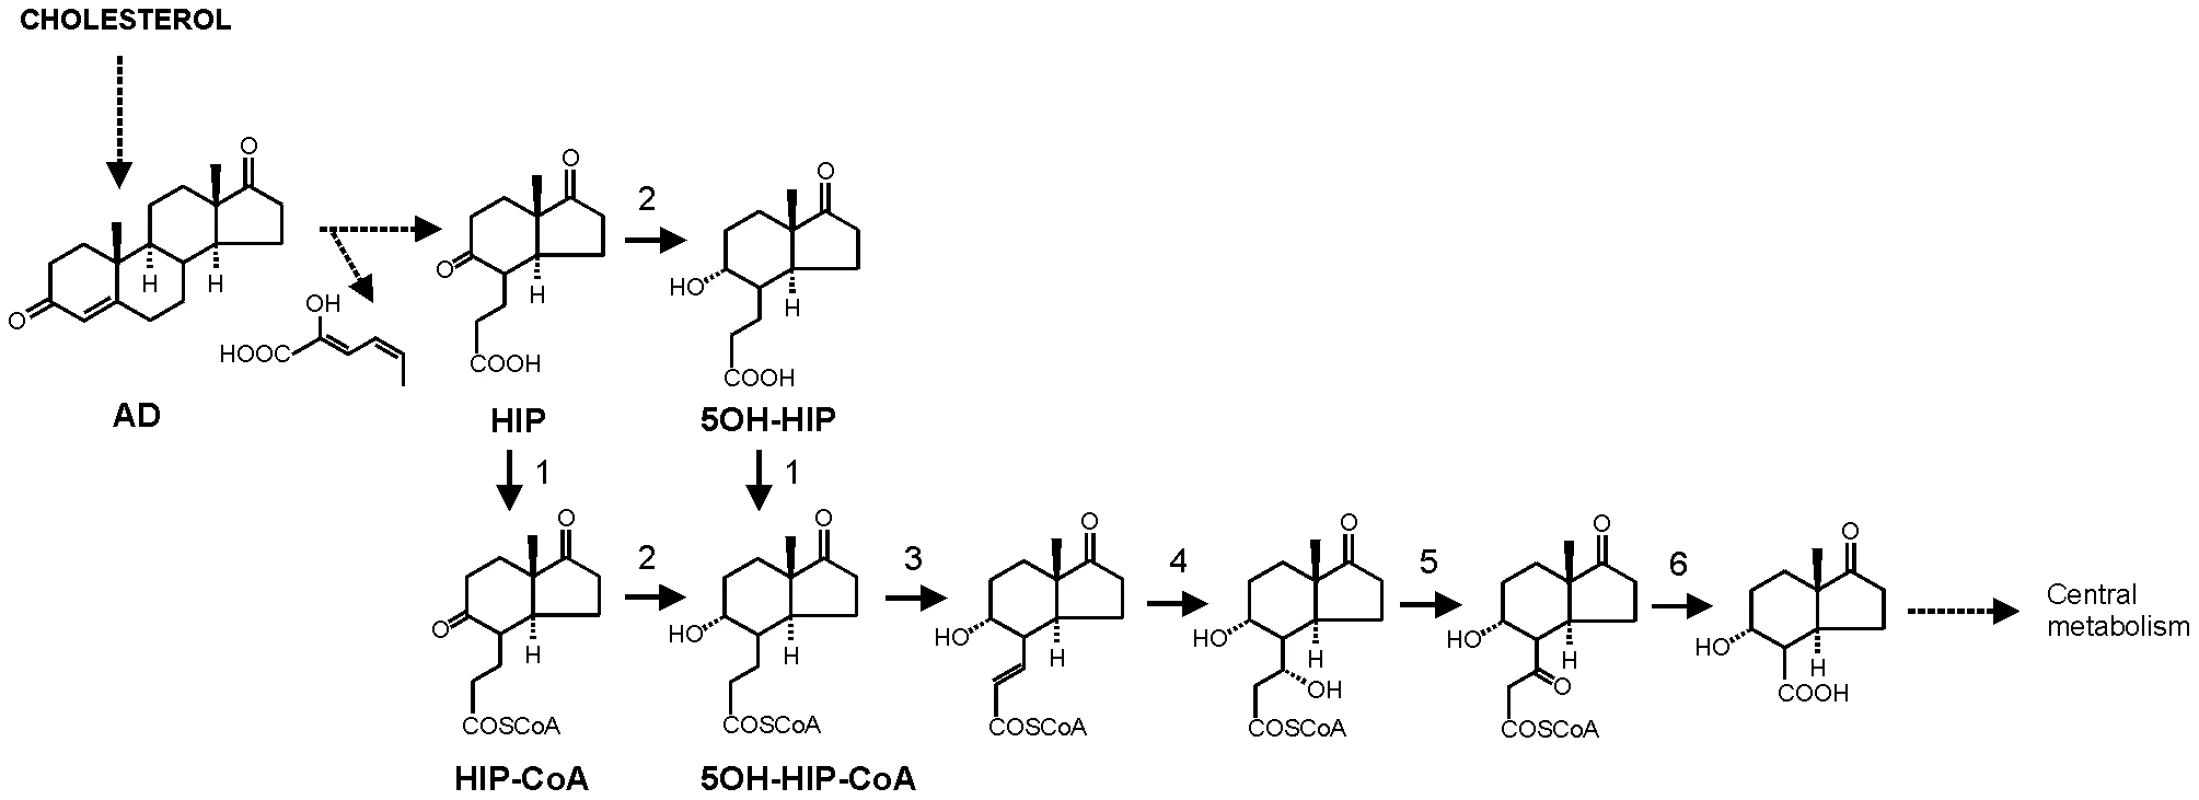 Proposed pathway of 4-androstene-3,17-dione (AD) degradation via β-oxidation of methylhexahydroindanone propionate intermediates 3aα-H-4α(3′-propionic acid)-7aβ-methylhexahydro-1,5-indanedione (HIP) and 3aα-H-4α(3′-propionic acid)-5α-hydroxy-7aβ-methylhexahydro-1-indanone (5OH-HIP) by <i>Rhodococcus equi</i>.